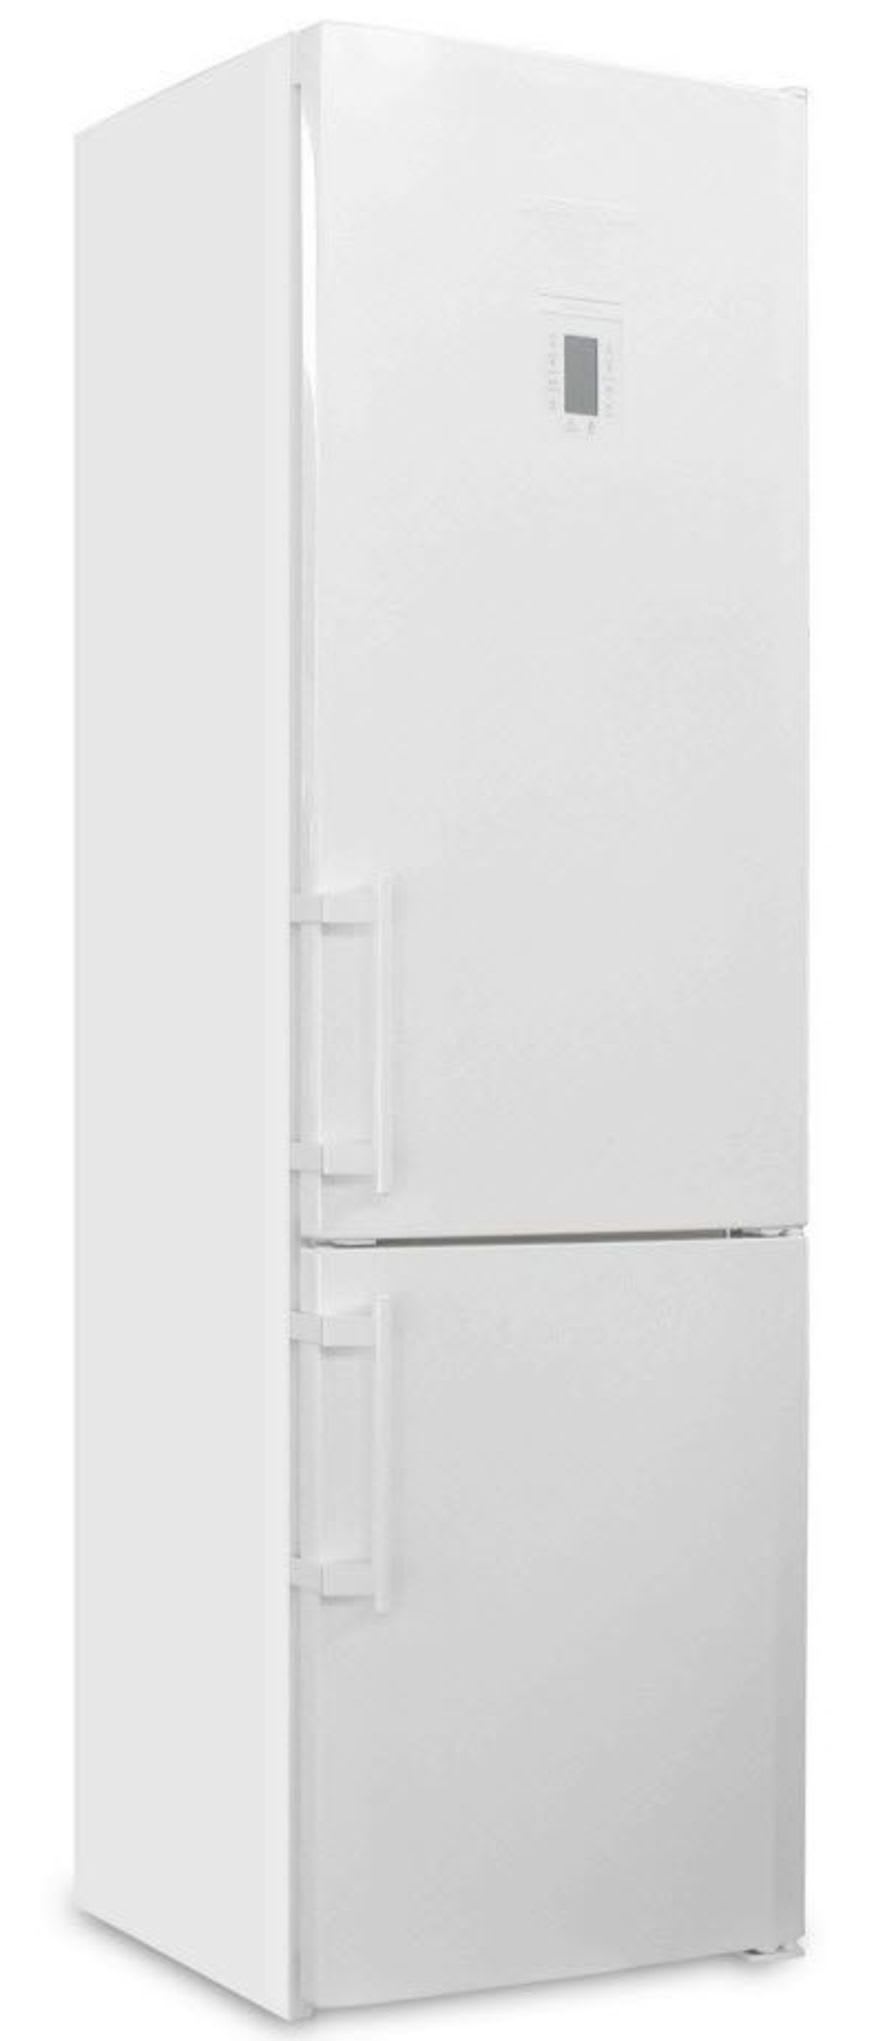 Laboratory refrigerator-freezer / upright / 2-door 2 °C ... 11 °C, -14 °C ... -28 °C, 370 L | BLCRF 370 EVERmed